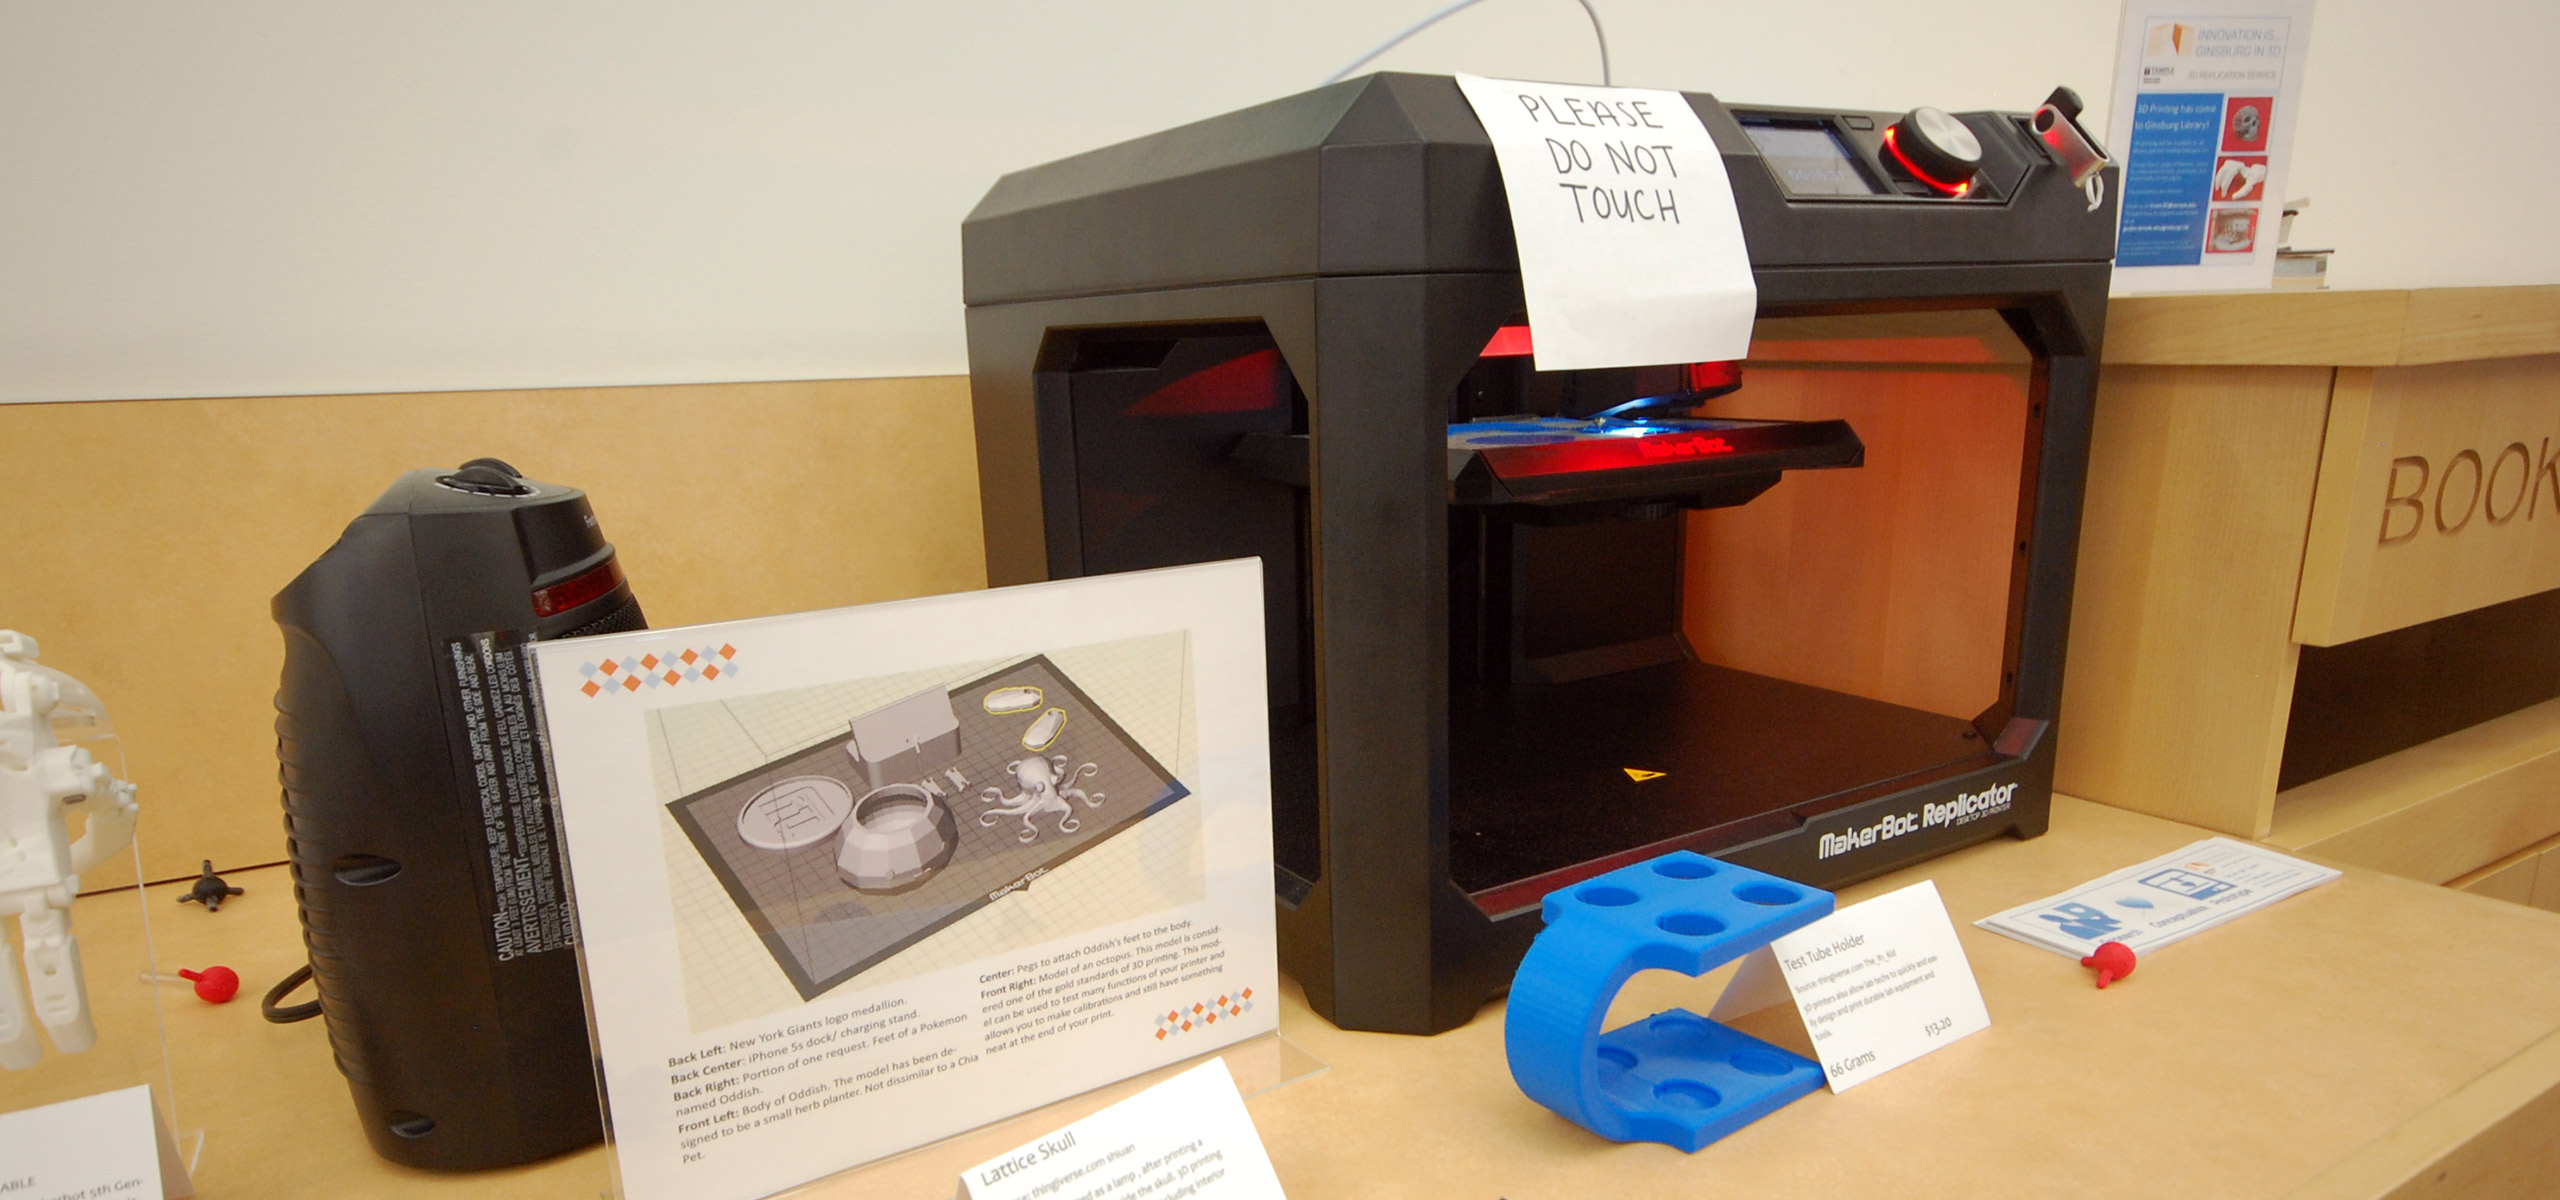 3D Printing Enhances Medical Imaging Education | School of Medicine at Temple University